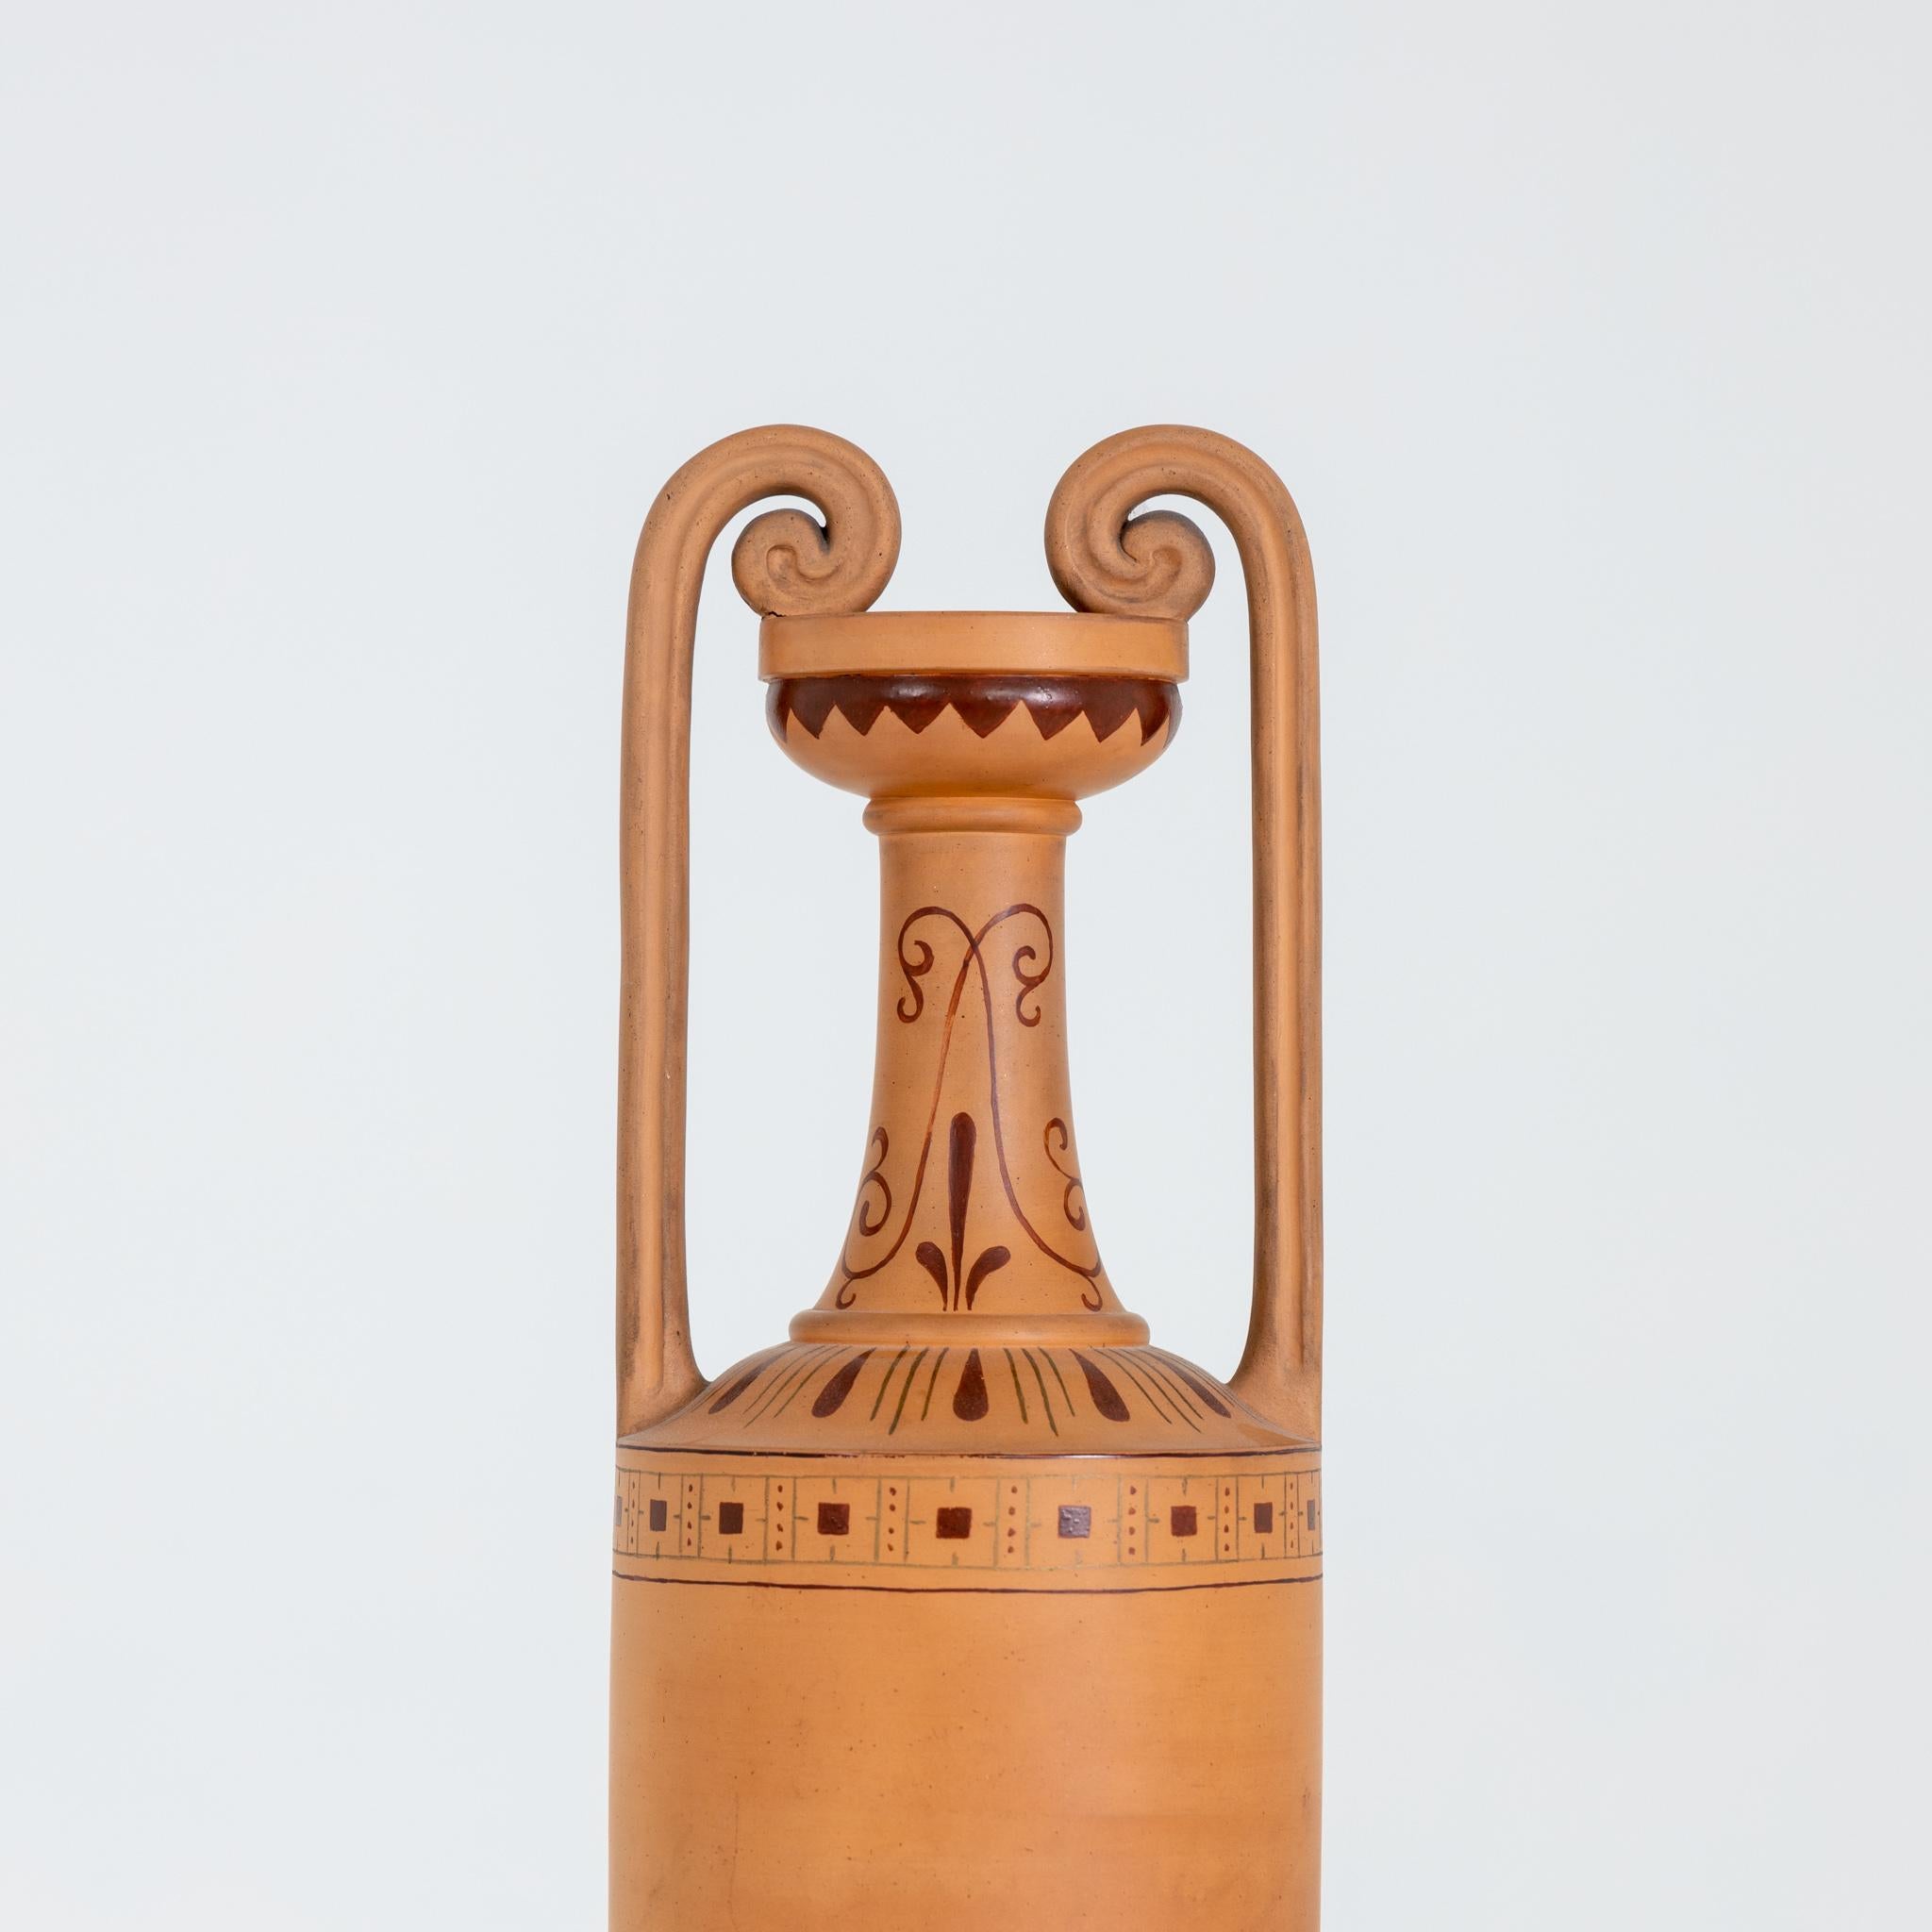 Terracotta Amphora, P. Ipsen, Denmark, Dated 1891 For Sale